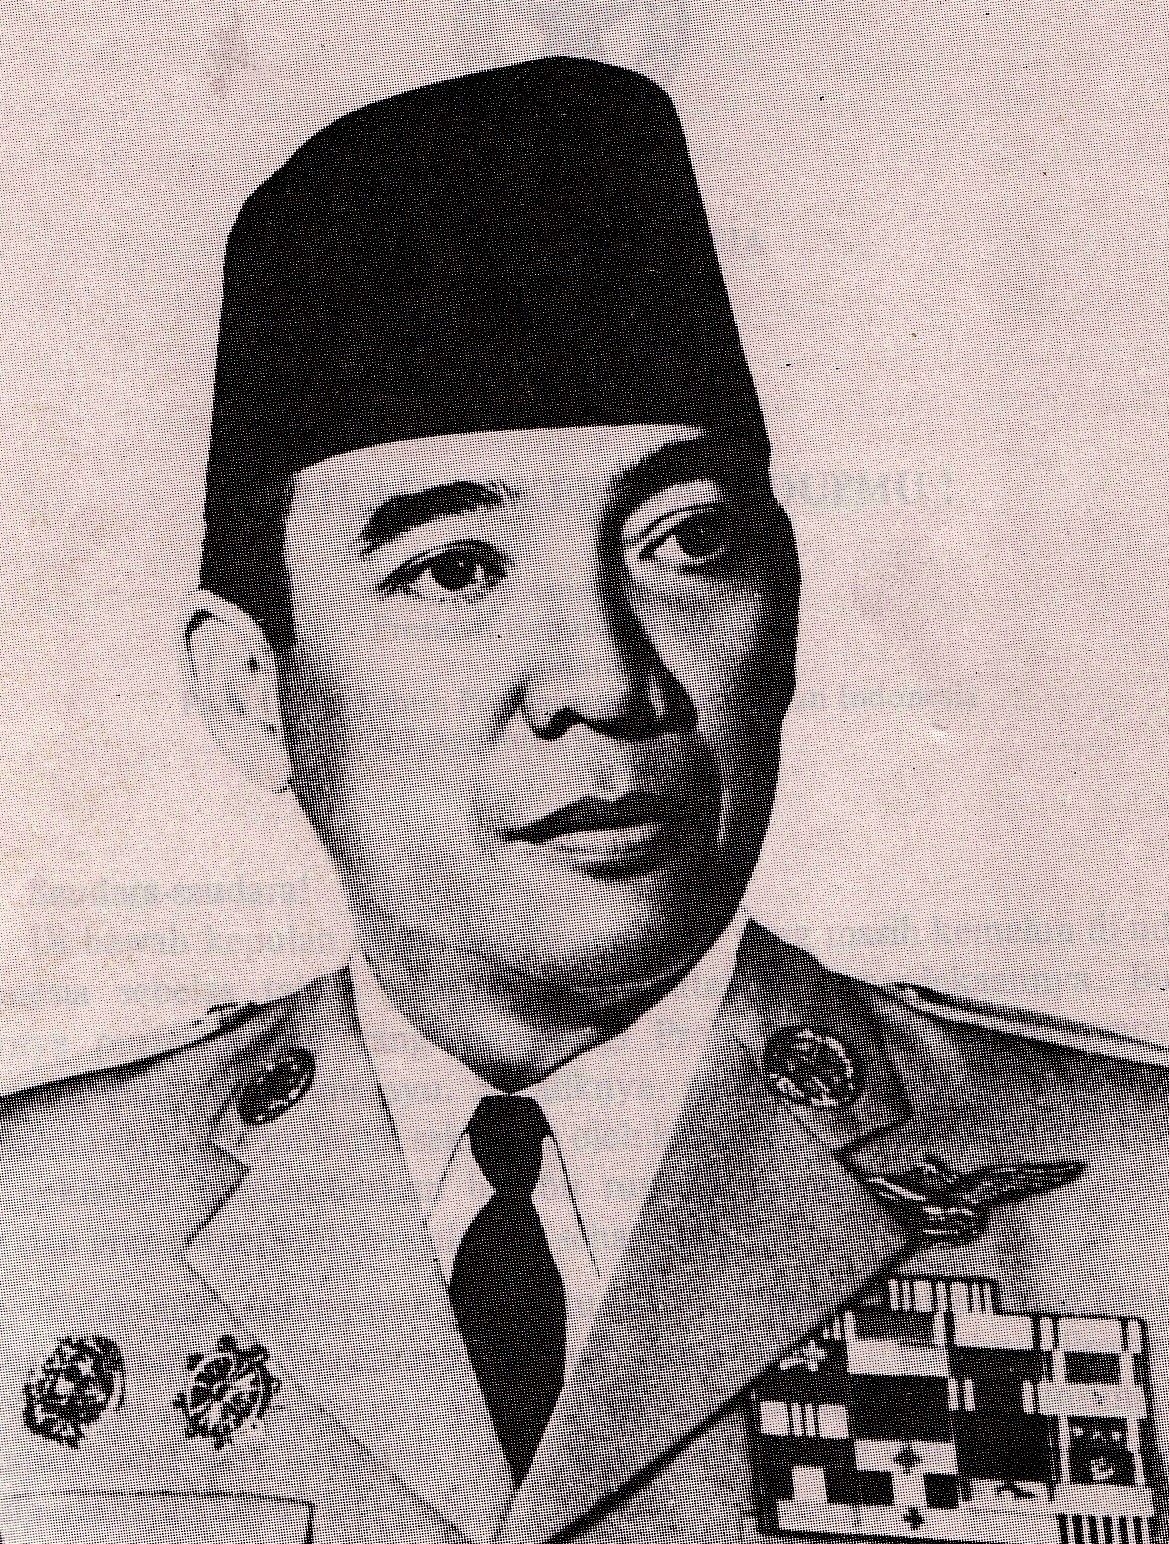 Gambar Foto Pahlawan Nasional Indonesia: Gambar Mantan Presiden Sukarno atau Bung Karno